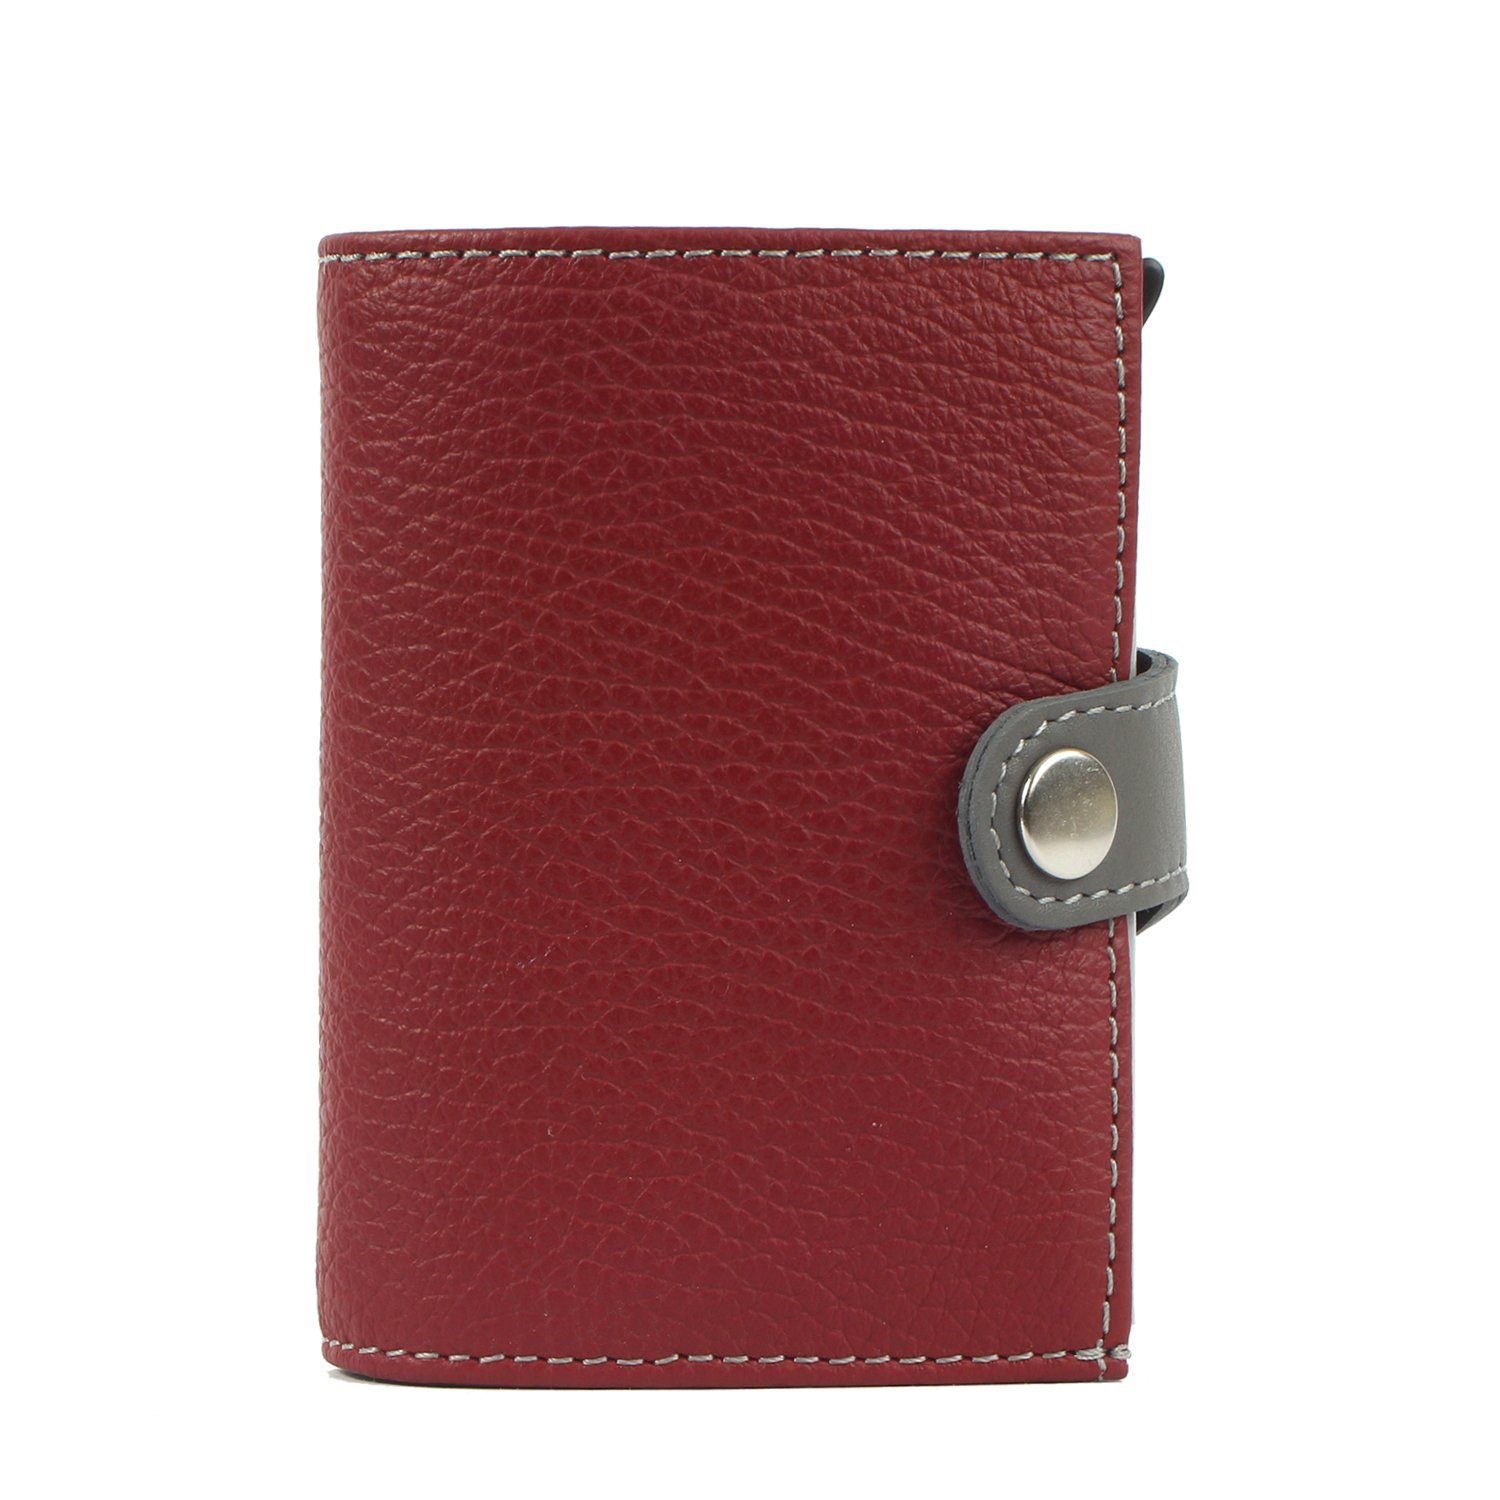 Margelisch Mini Geldbörse noonyu karminrot leather, RFID aus Kreditkartenbörse double Upcycling Leder